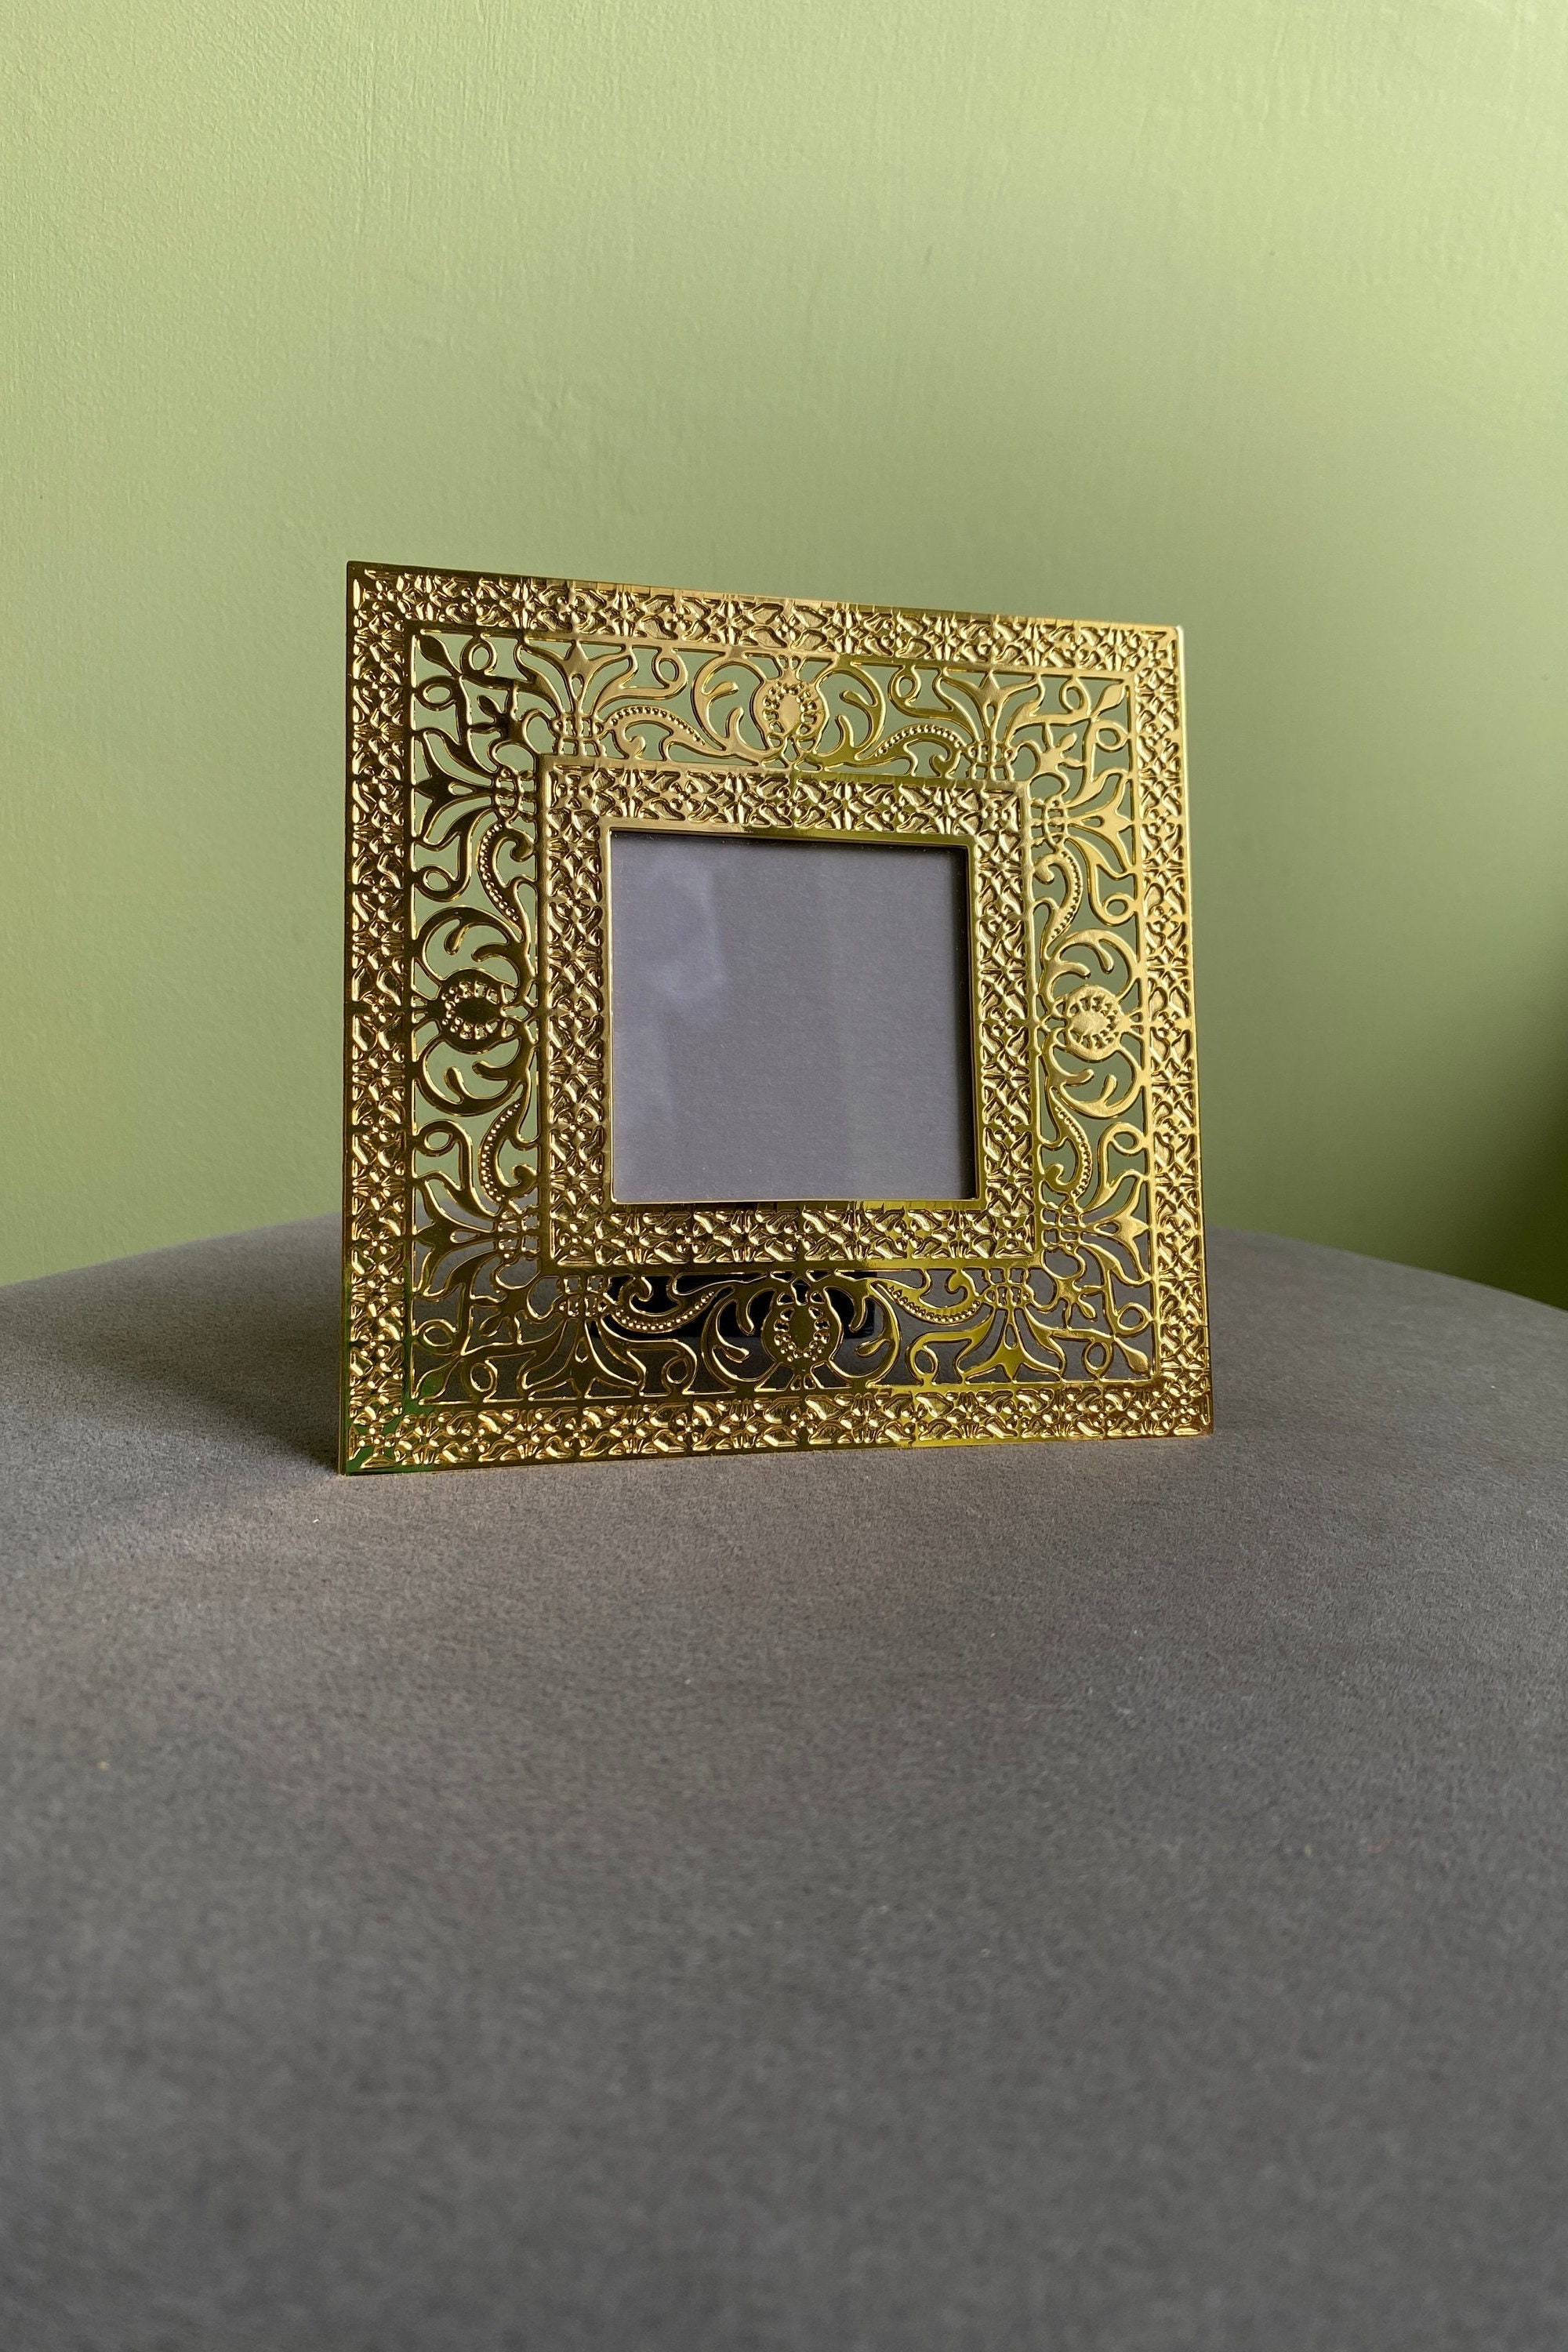 Antique French Museal Metallic Gold Bullion Baroque Tassel